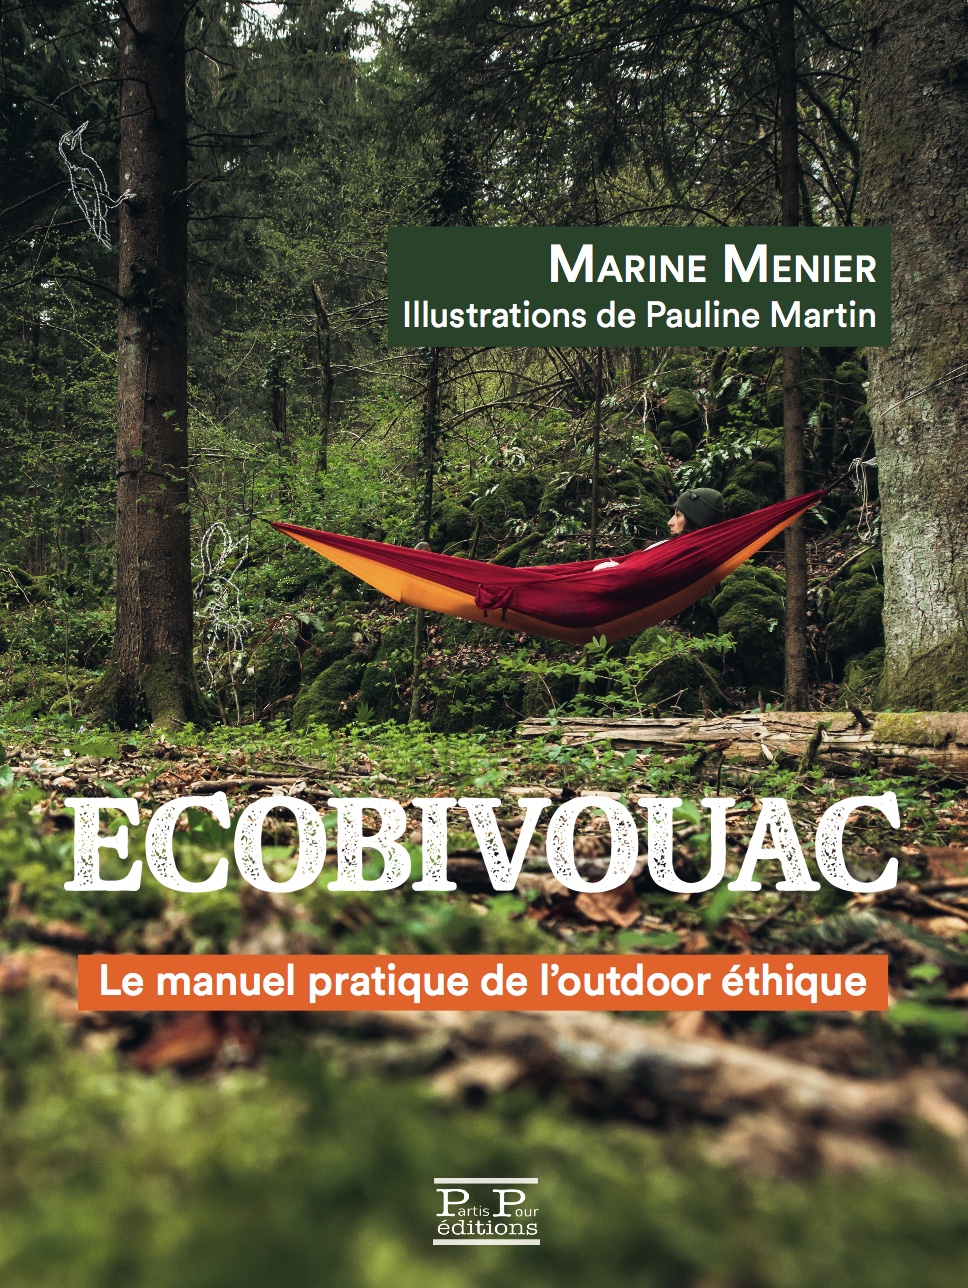 Ecobivouac_Marine_Menier_EditionsPartisPour